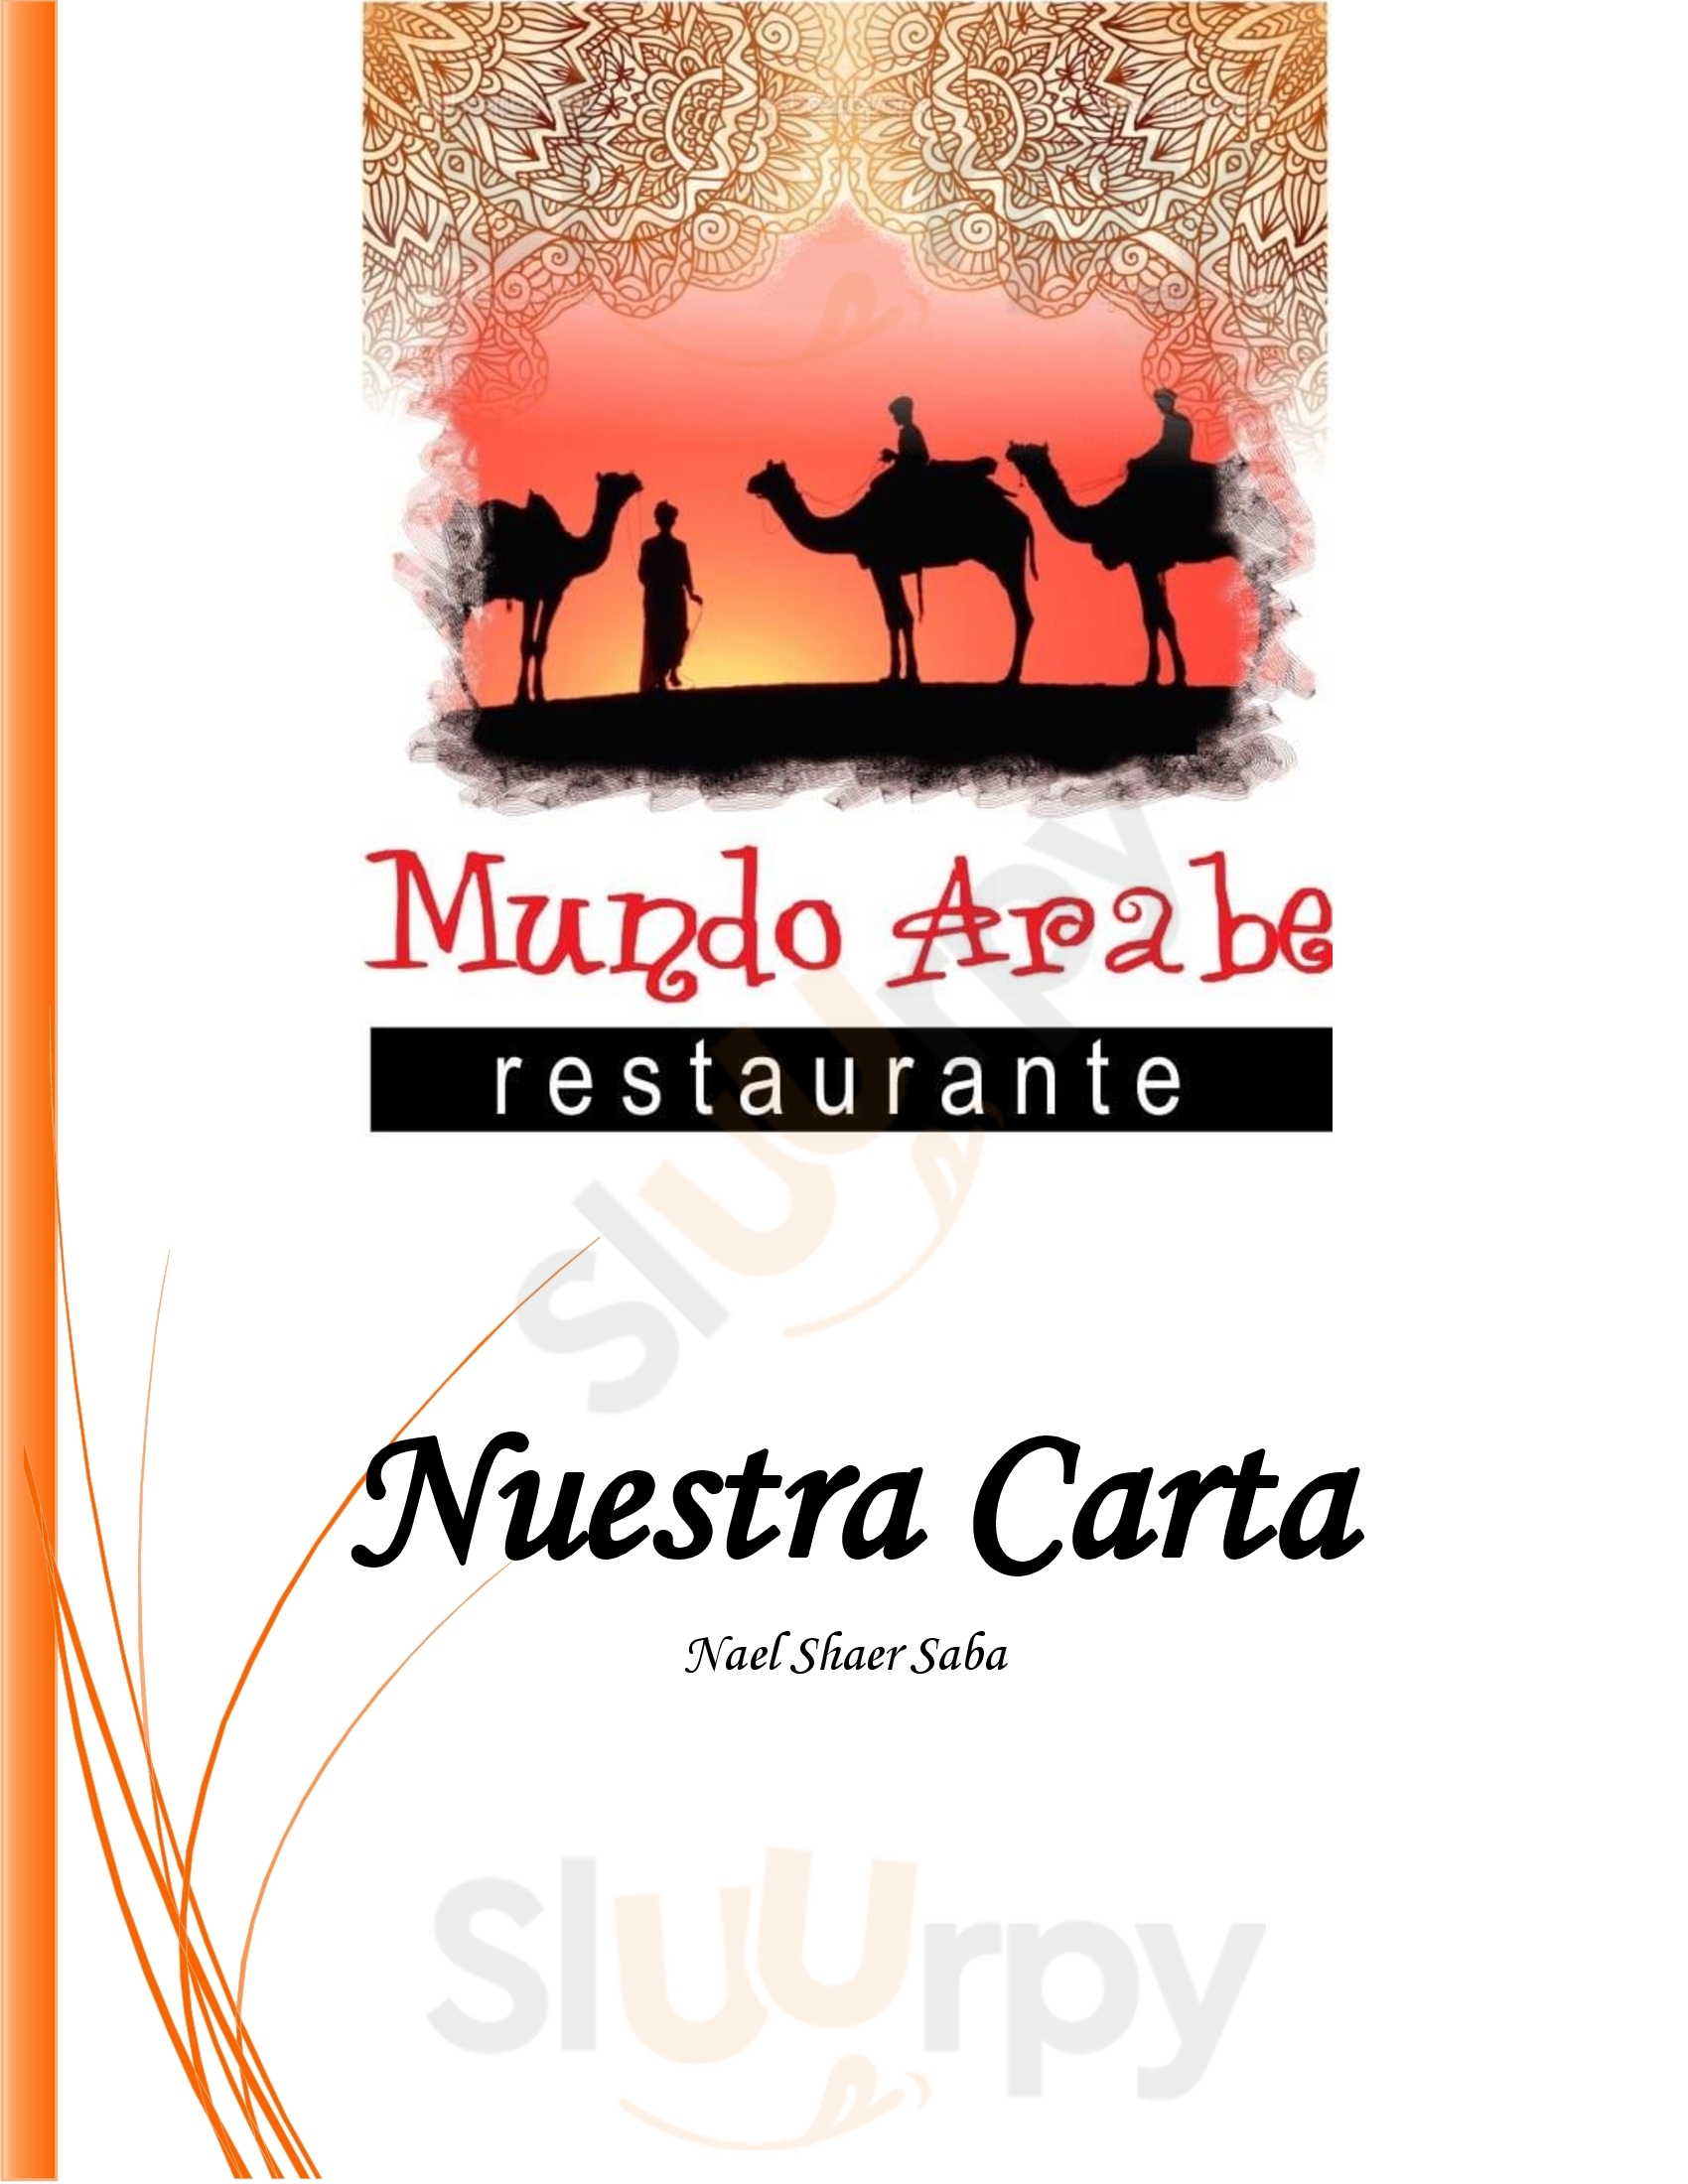 Restaurant Mundo Arabe Los Angeles Menu - 1